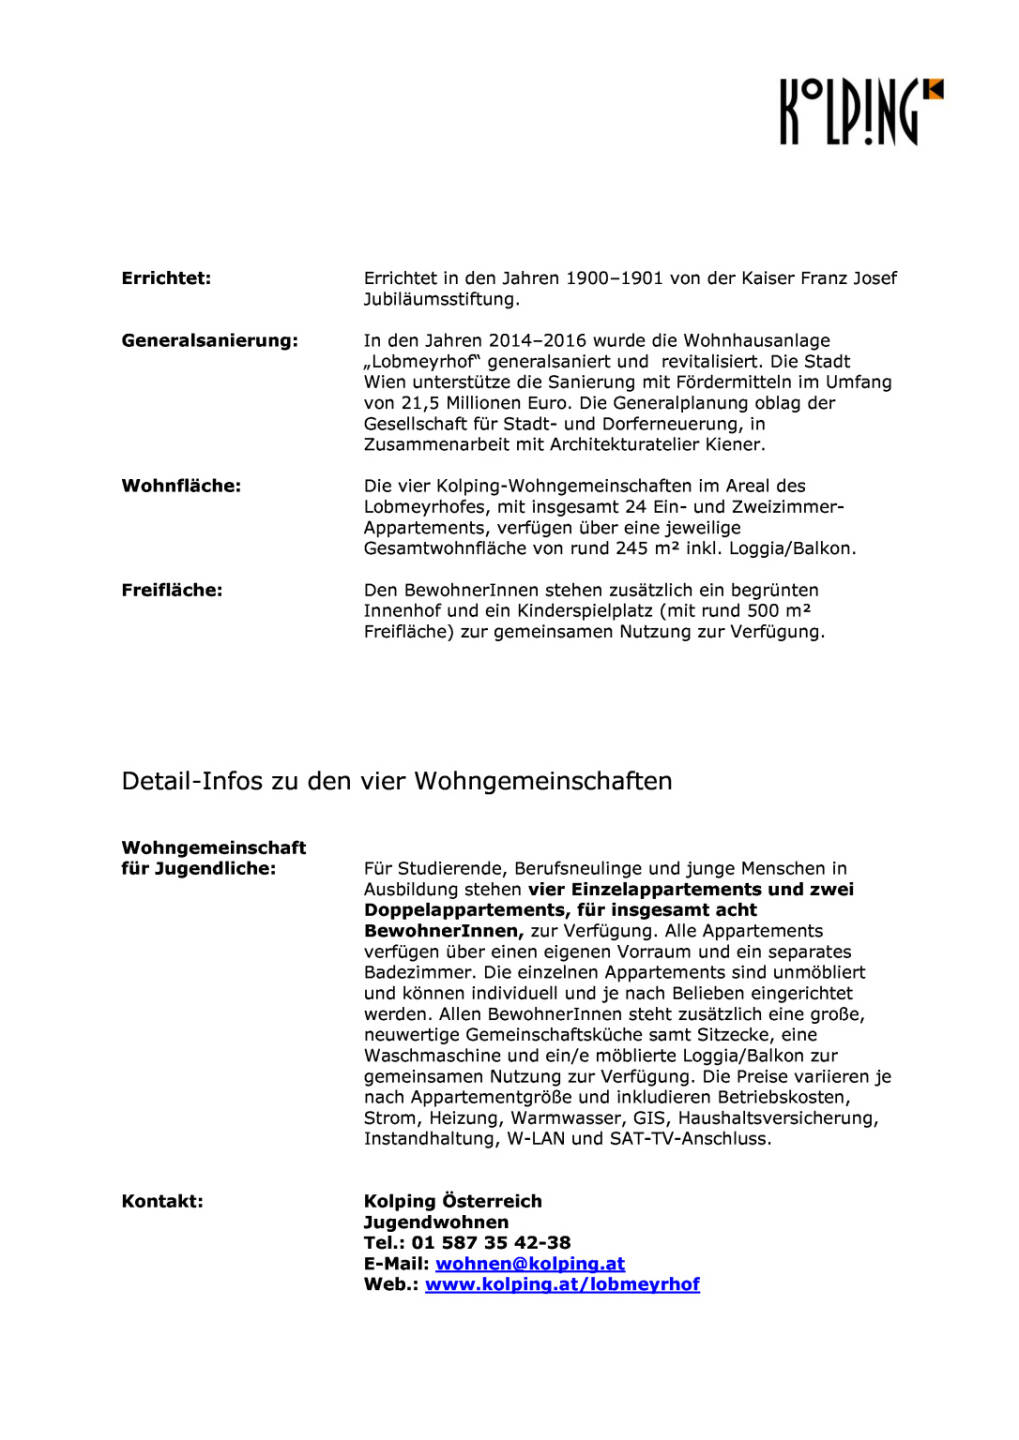 Kolping Österreich: Neues Wohnprojekt im Lobmeyrhof, Seite 2/4, komplettes Dokument unter http://boerse-social.com/static/uploads/file_1499_kolping_osterreich_neues_wohnprojekt_im_lobmeyrhof.pdf